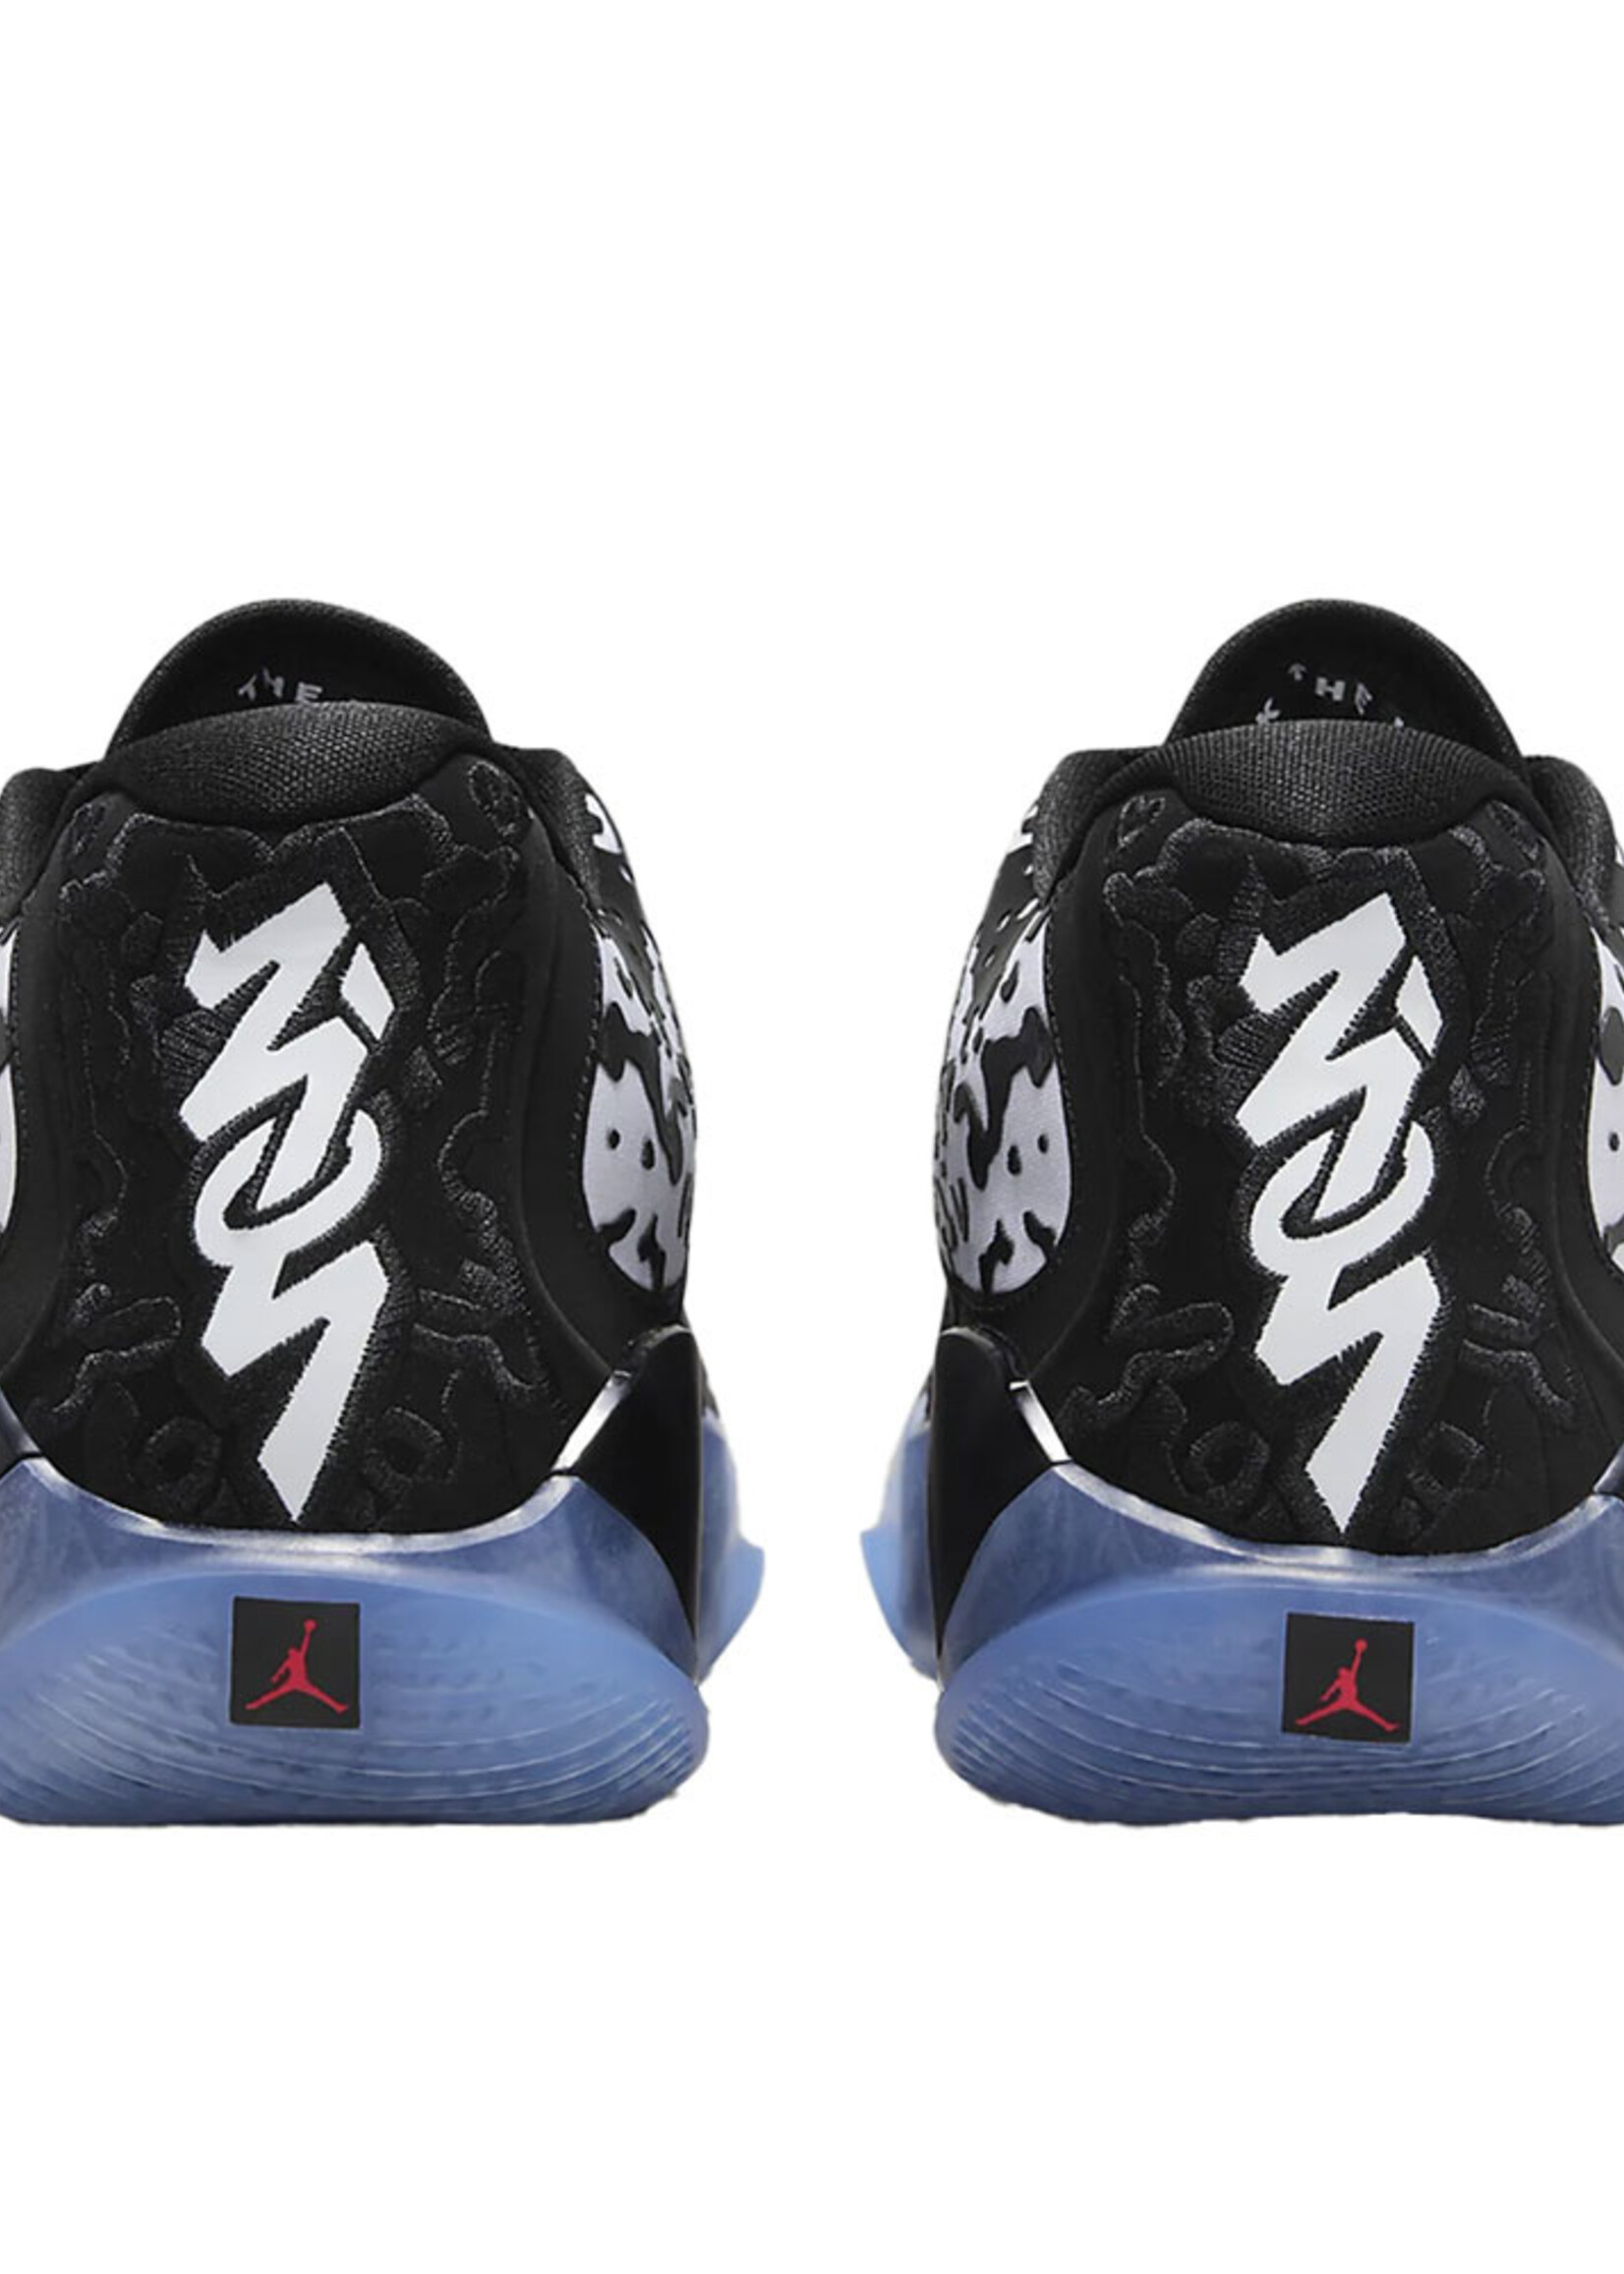 Nike Jordan Zion 3 'Gen Zion' Black White